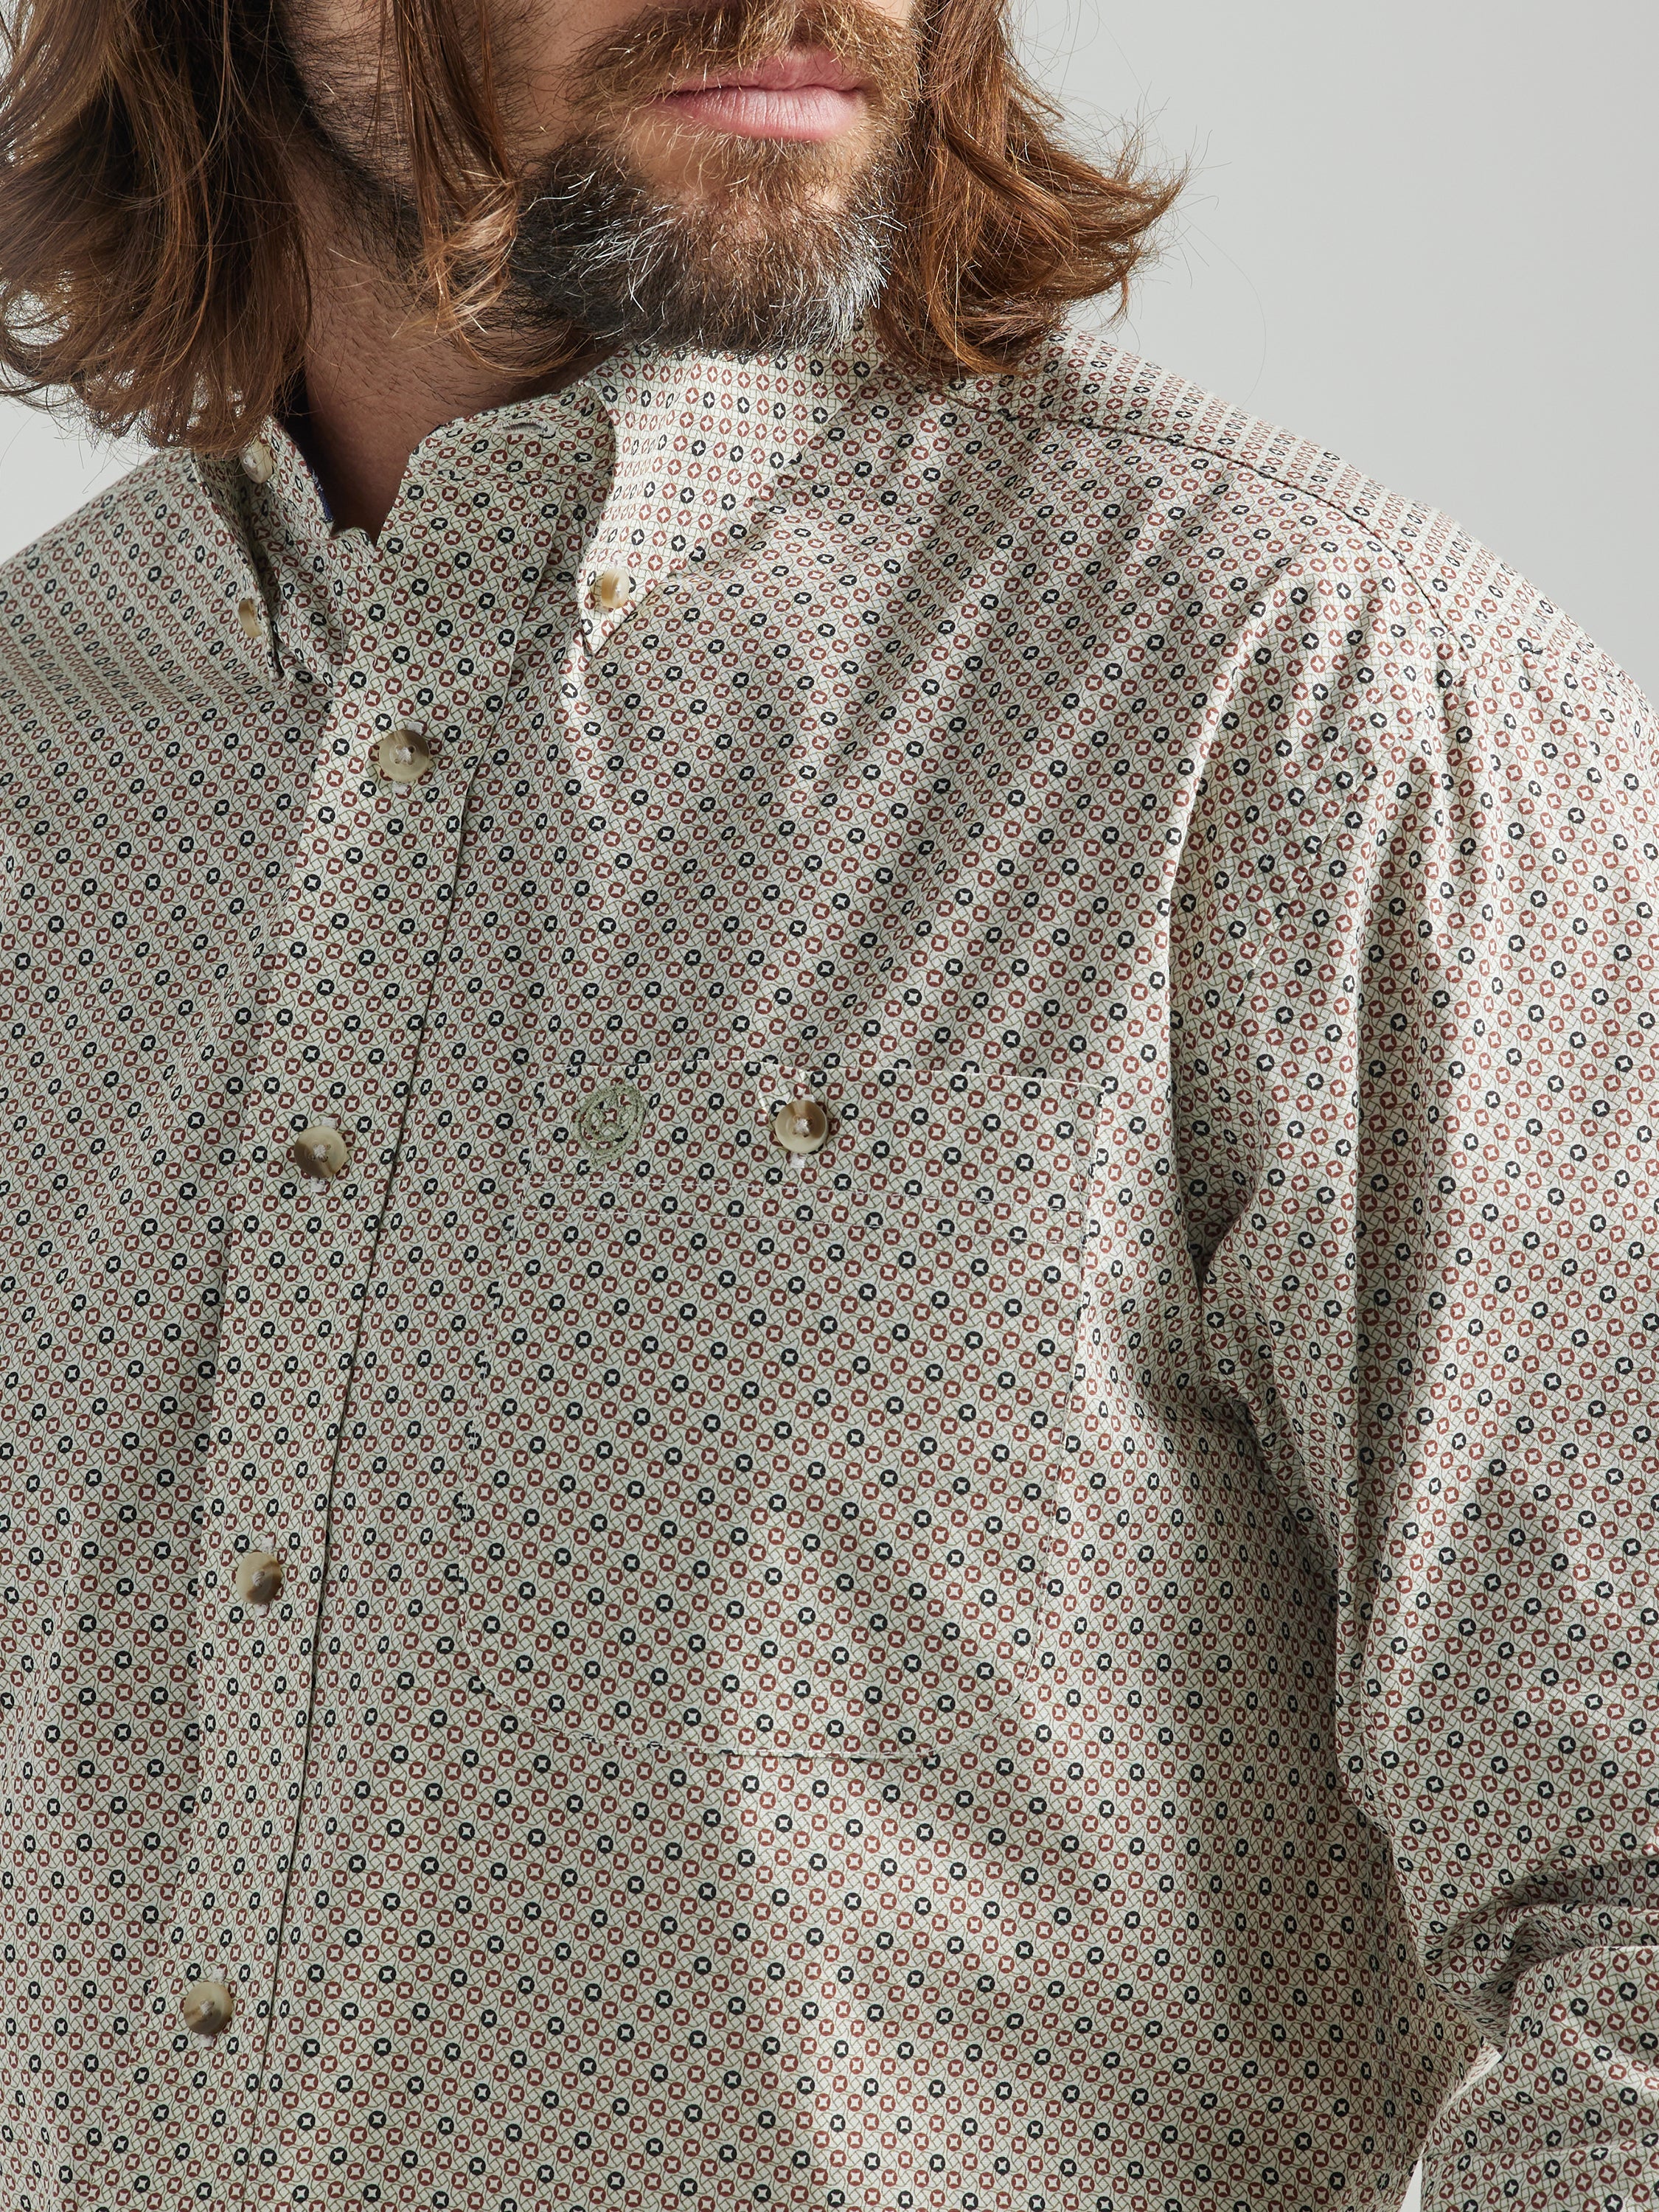 Wrangler Men's George Strait™ Button-Down Long Sleeve Western Shirt - Olive